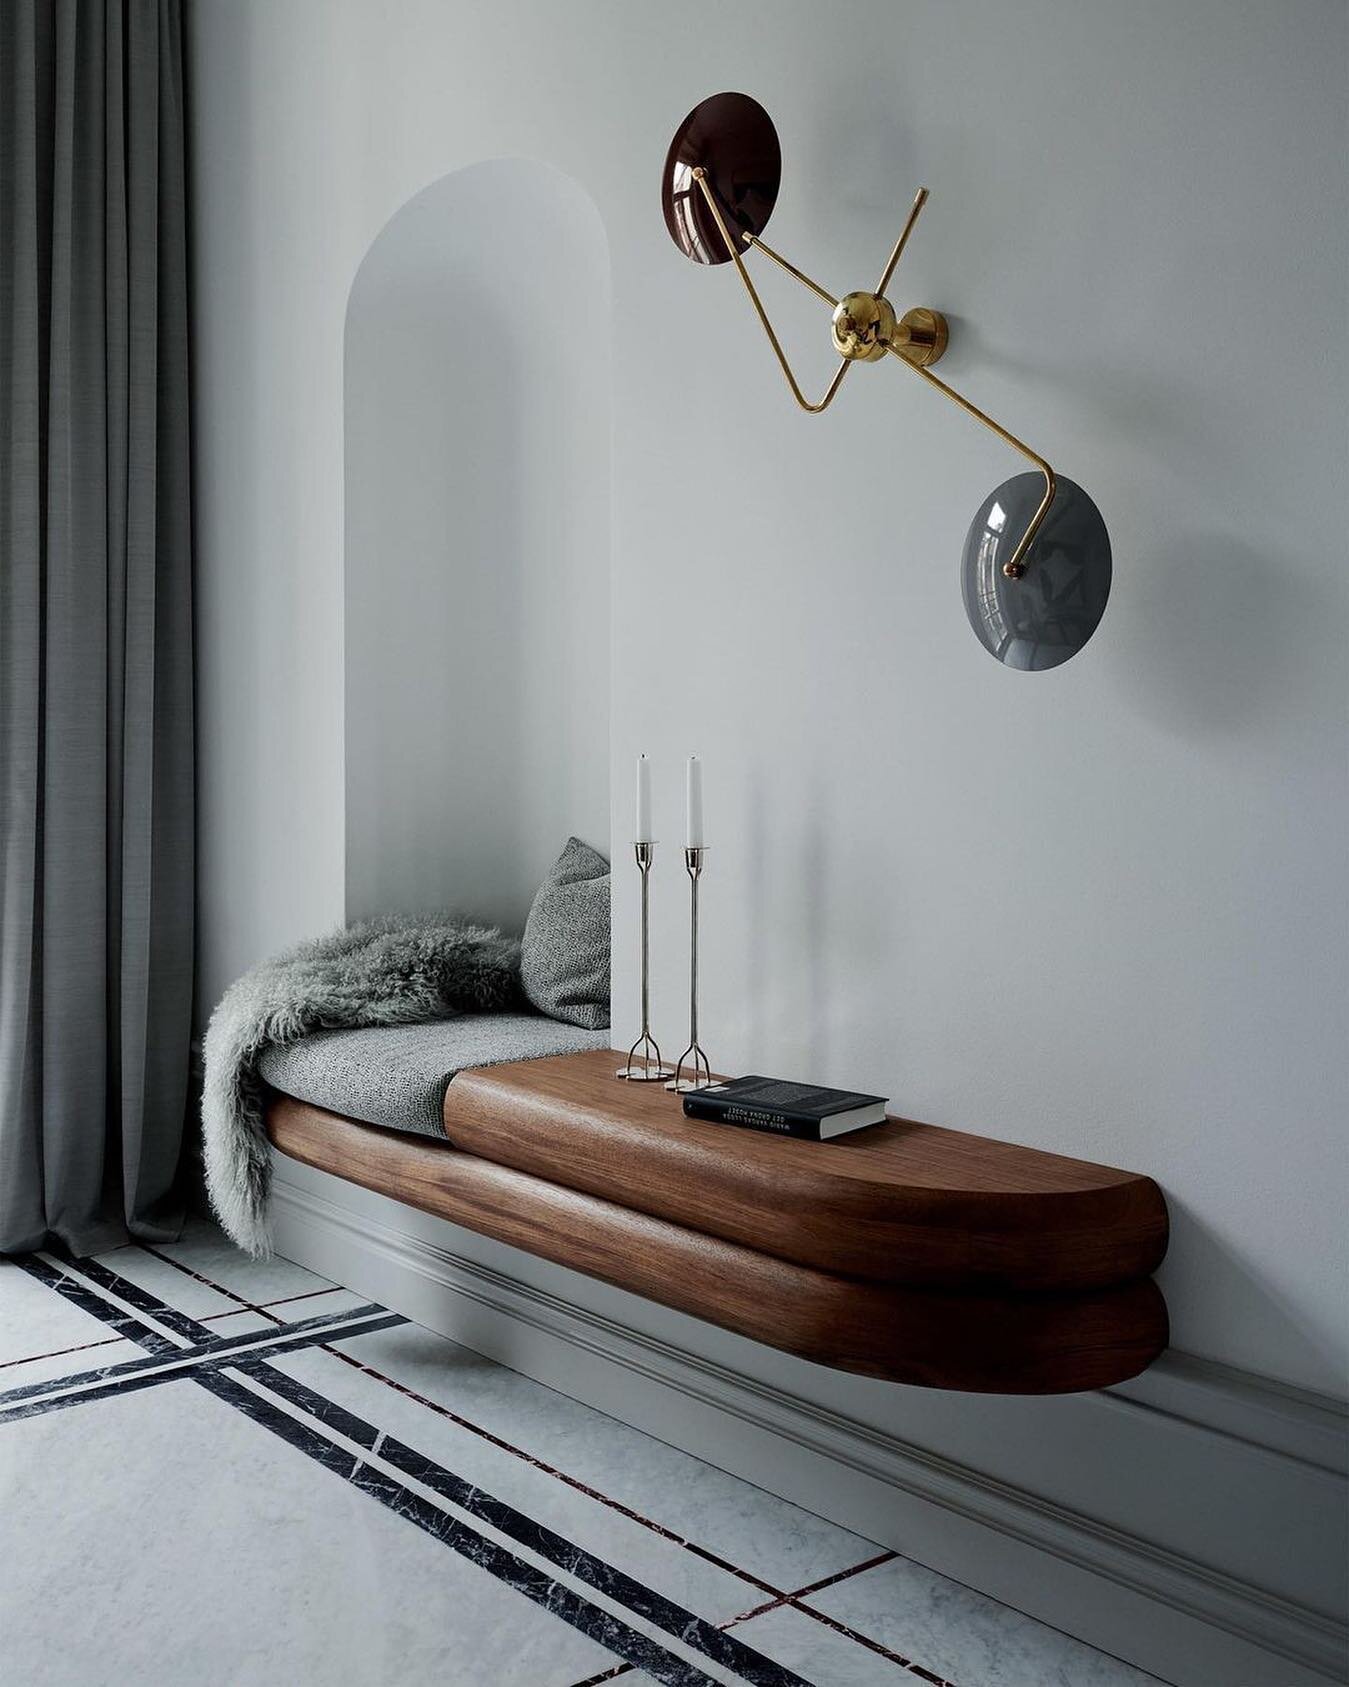 Bespoke beauty by @joannalaven #interiors #design